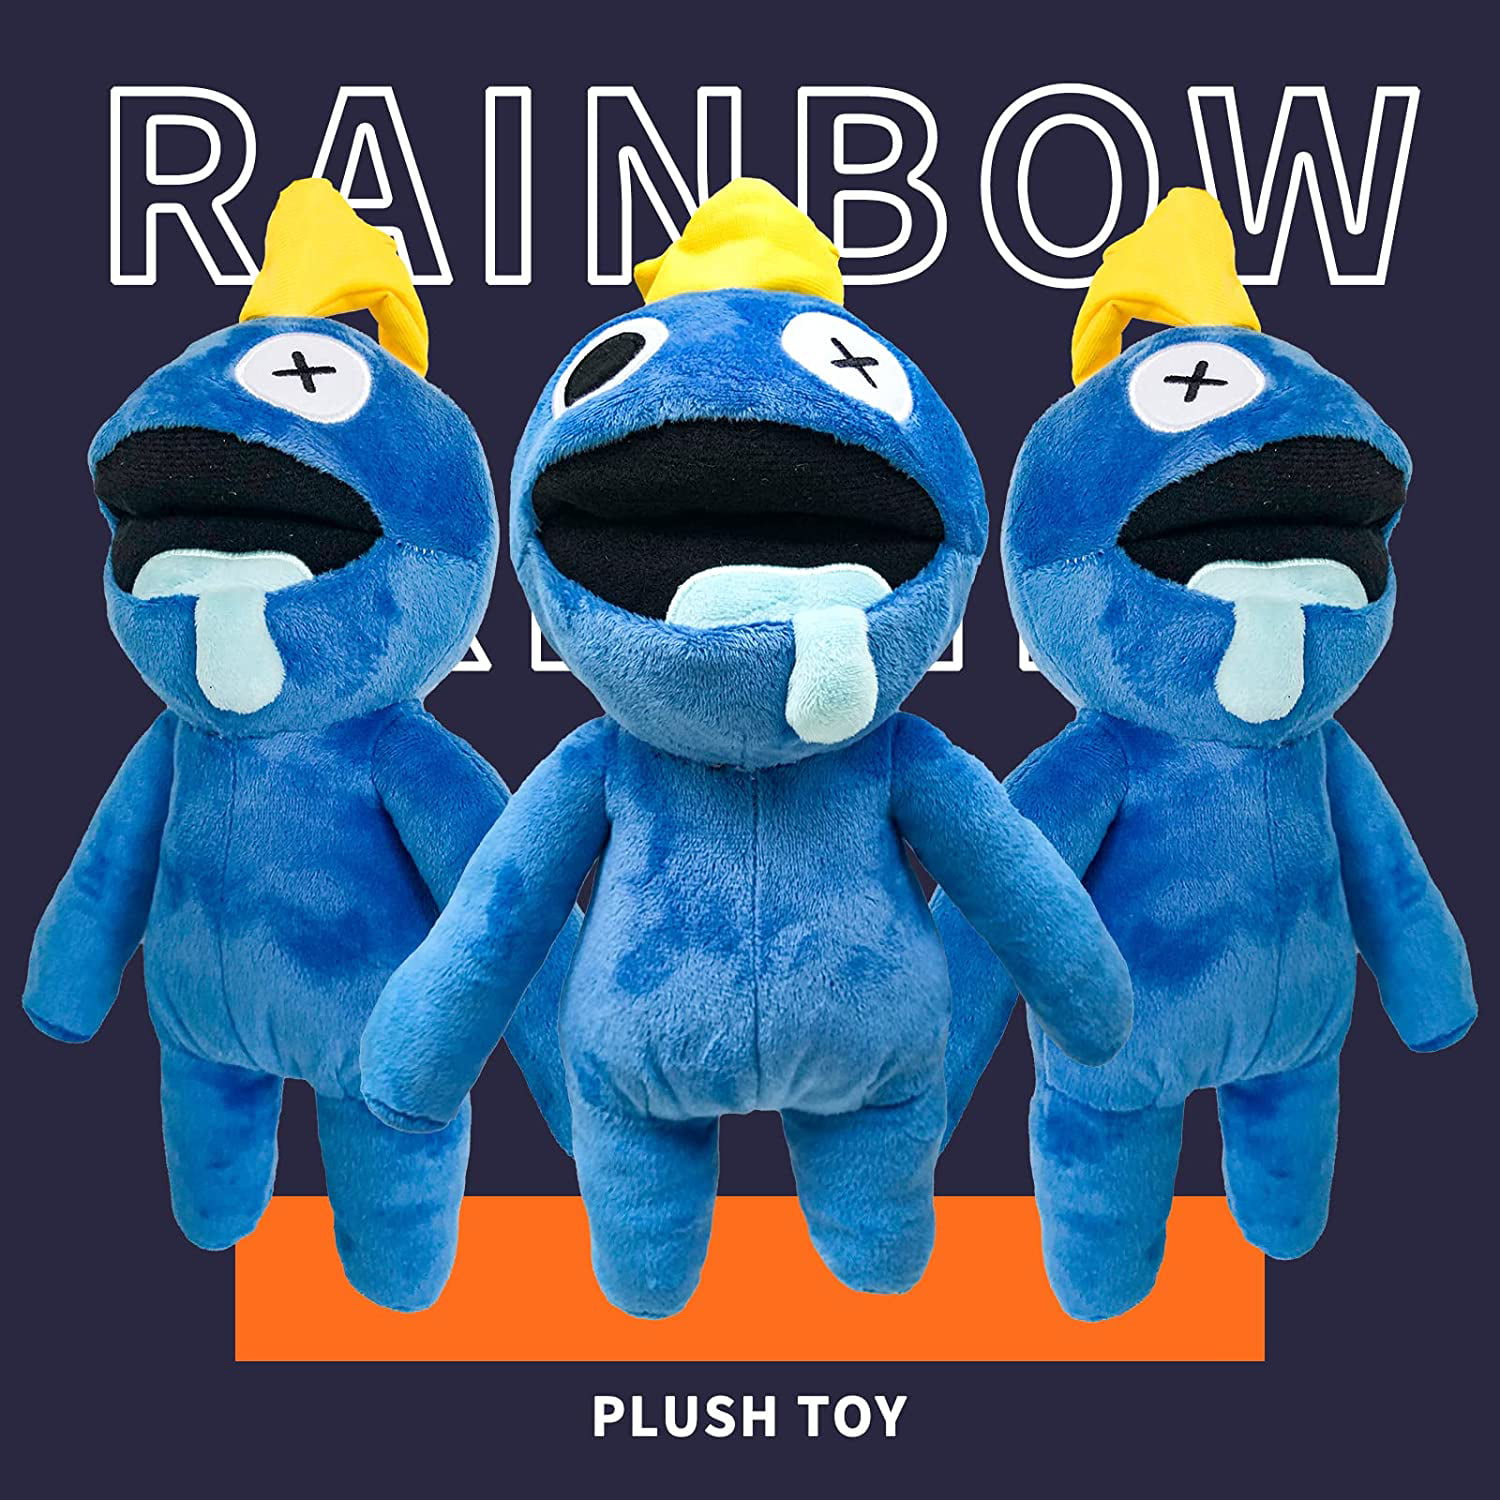 zd roblox rainbow friends plush toy